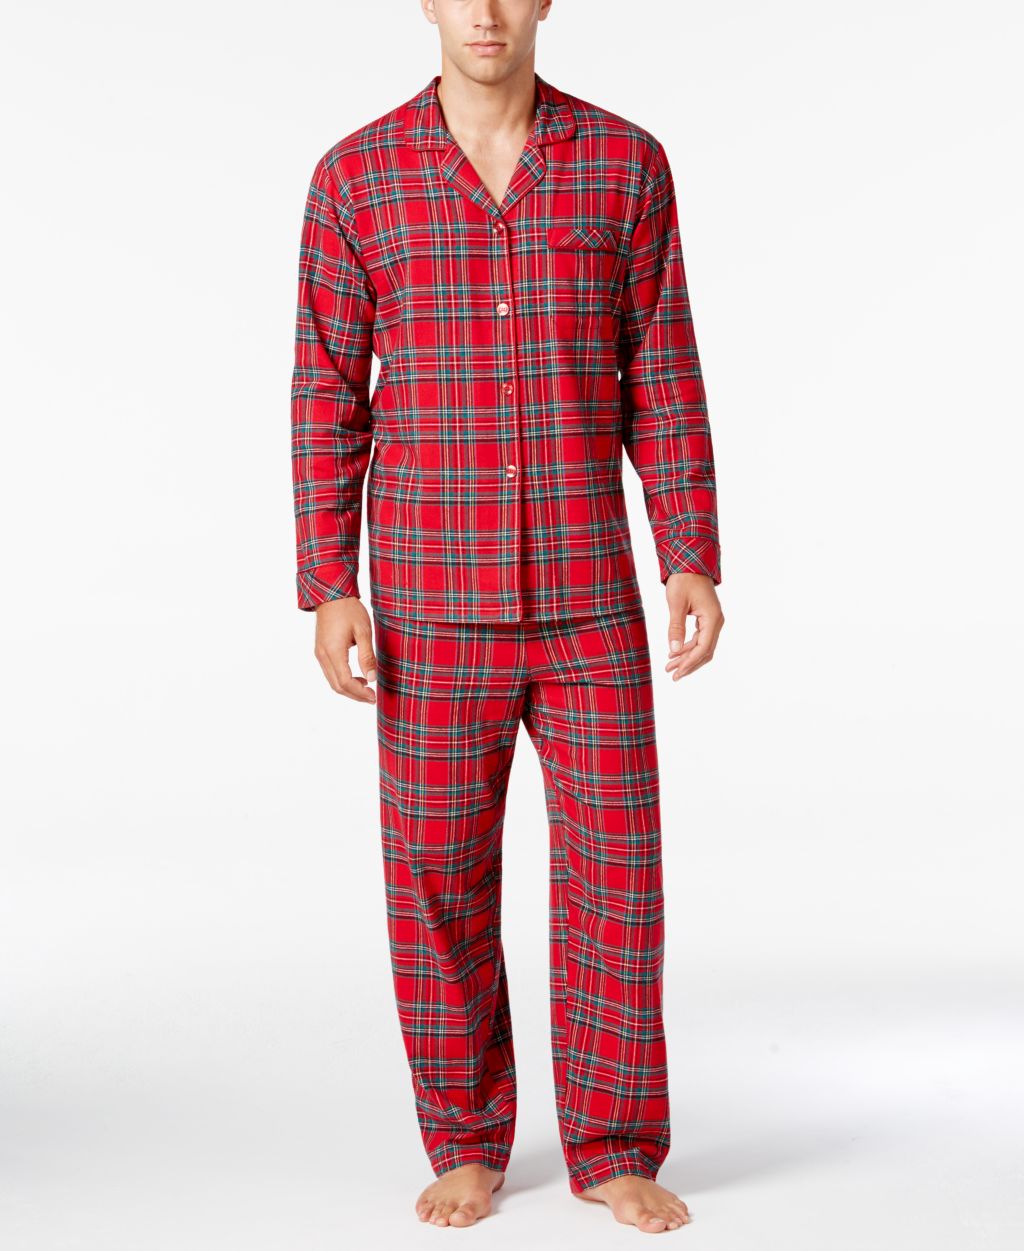 Family Pajamas Men's Holiday All Cotton Plaid Pajama Set, Only at Macy's